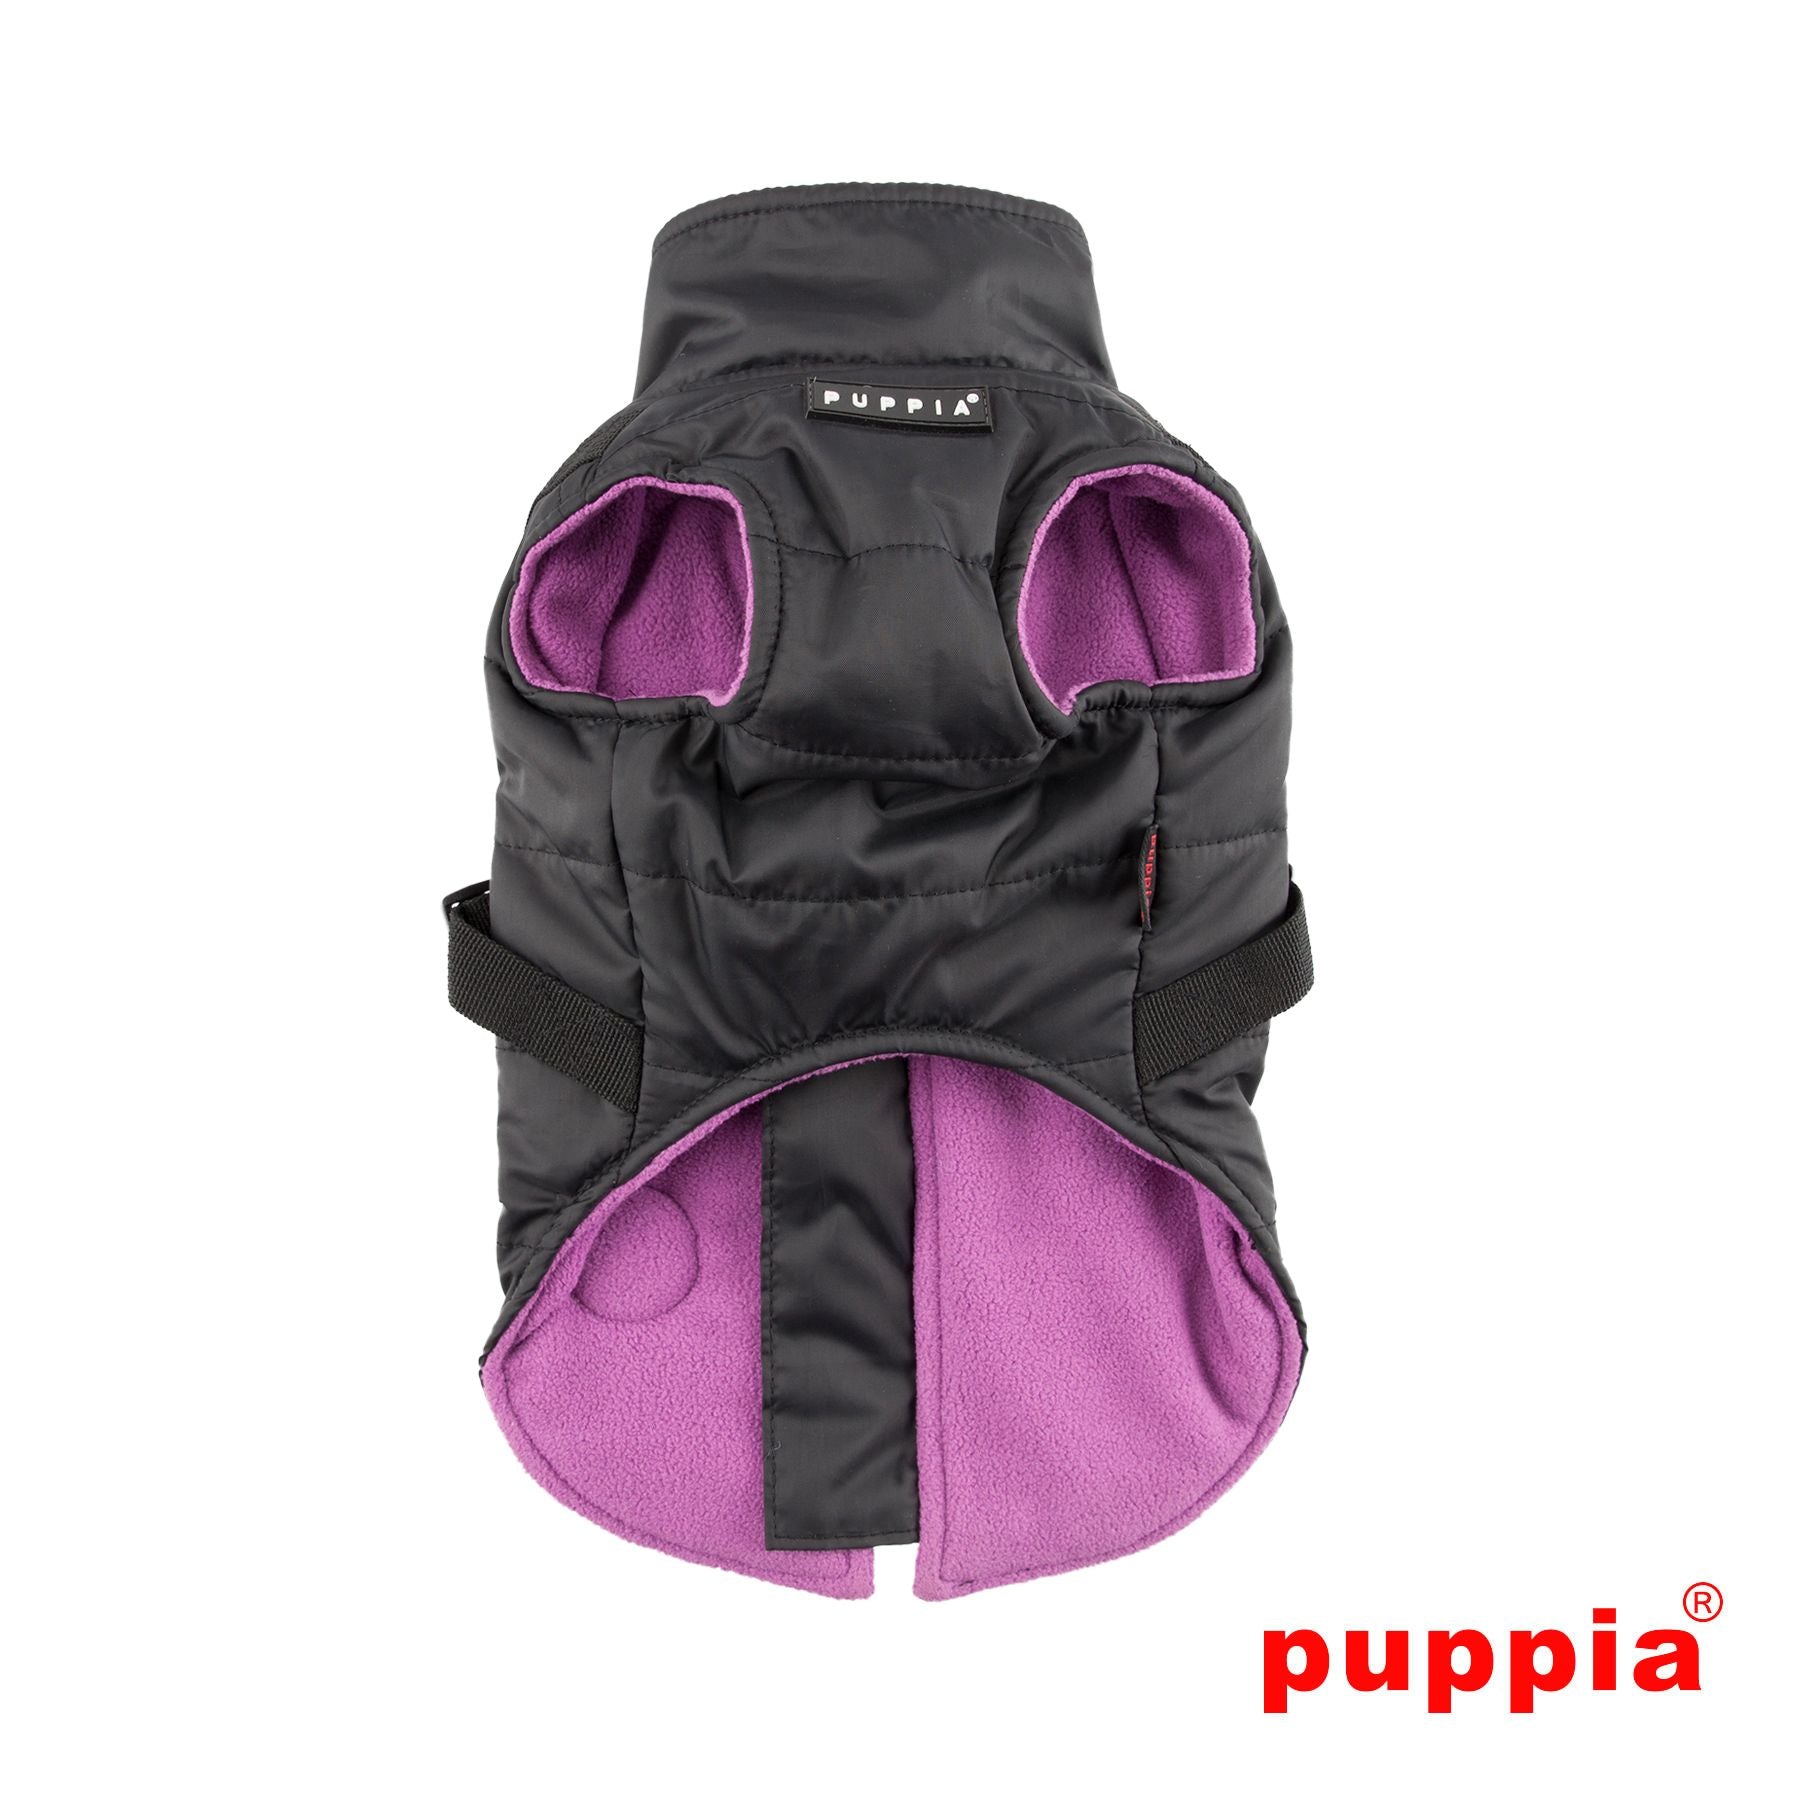 Puppia Apparel Puppia Mountaineer II Harness Jumper/Jacket